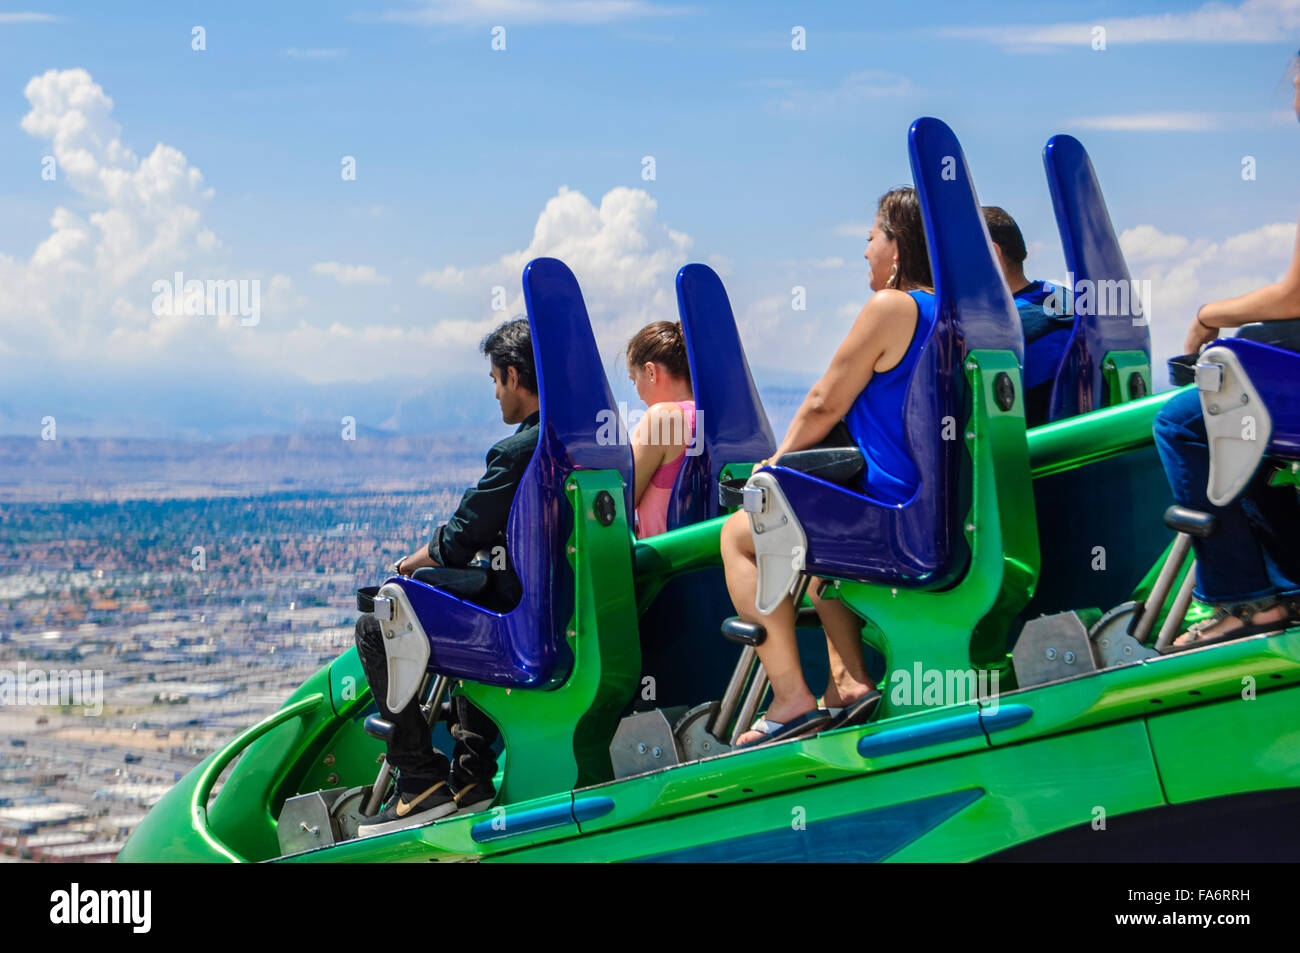 Big Shot Amusement Ride atop … – License image – 70058520 ❘ lookphotos